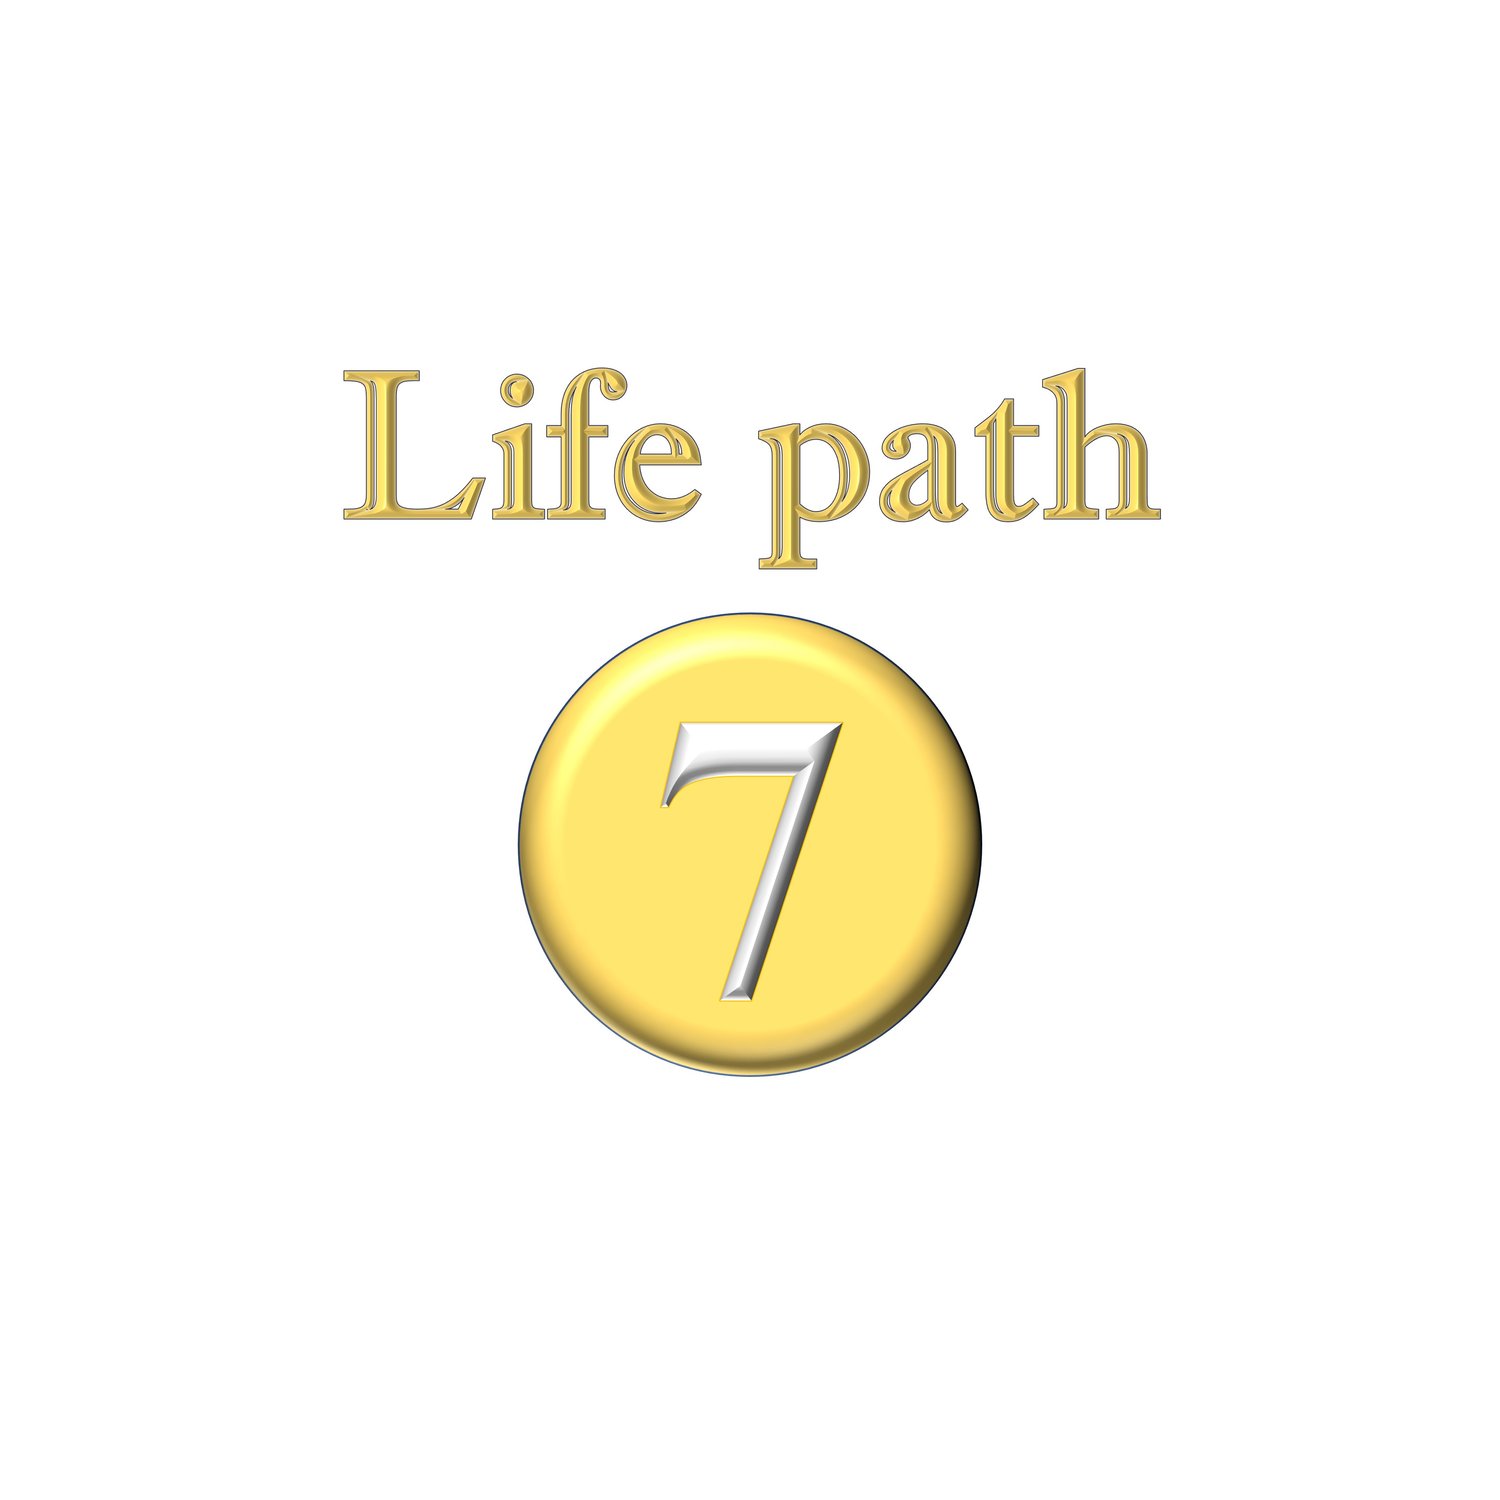 Life path 7